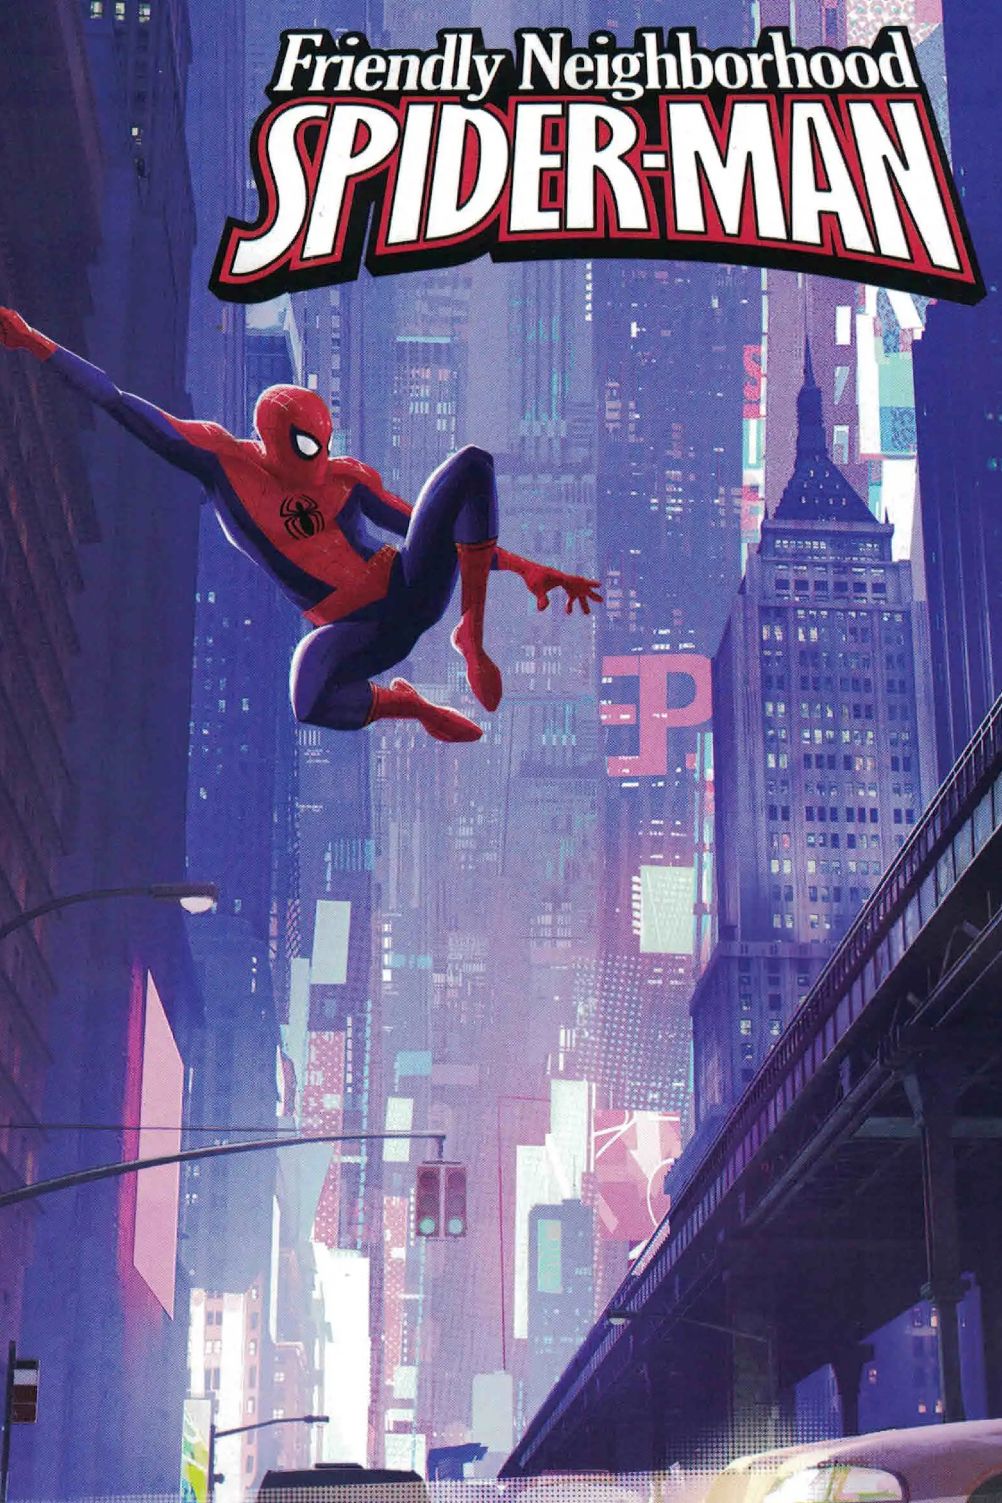 Friendly Neighborhood Spider-Man temp poster